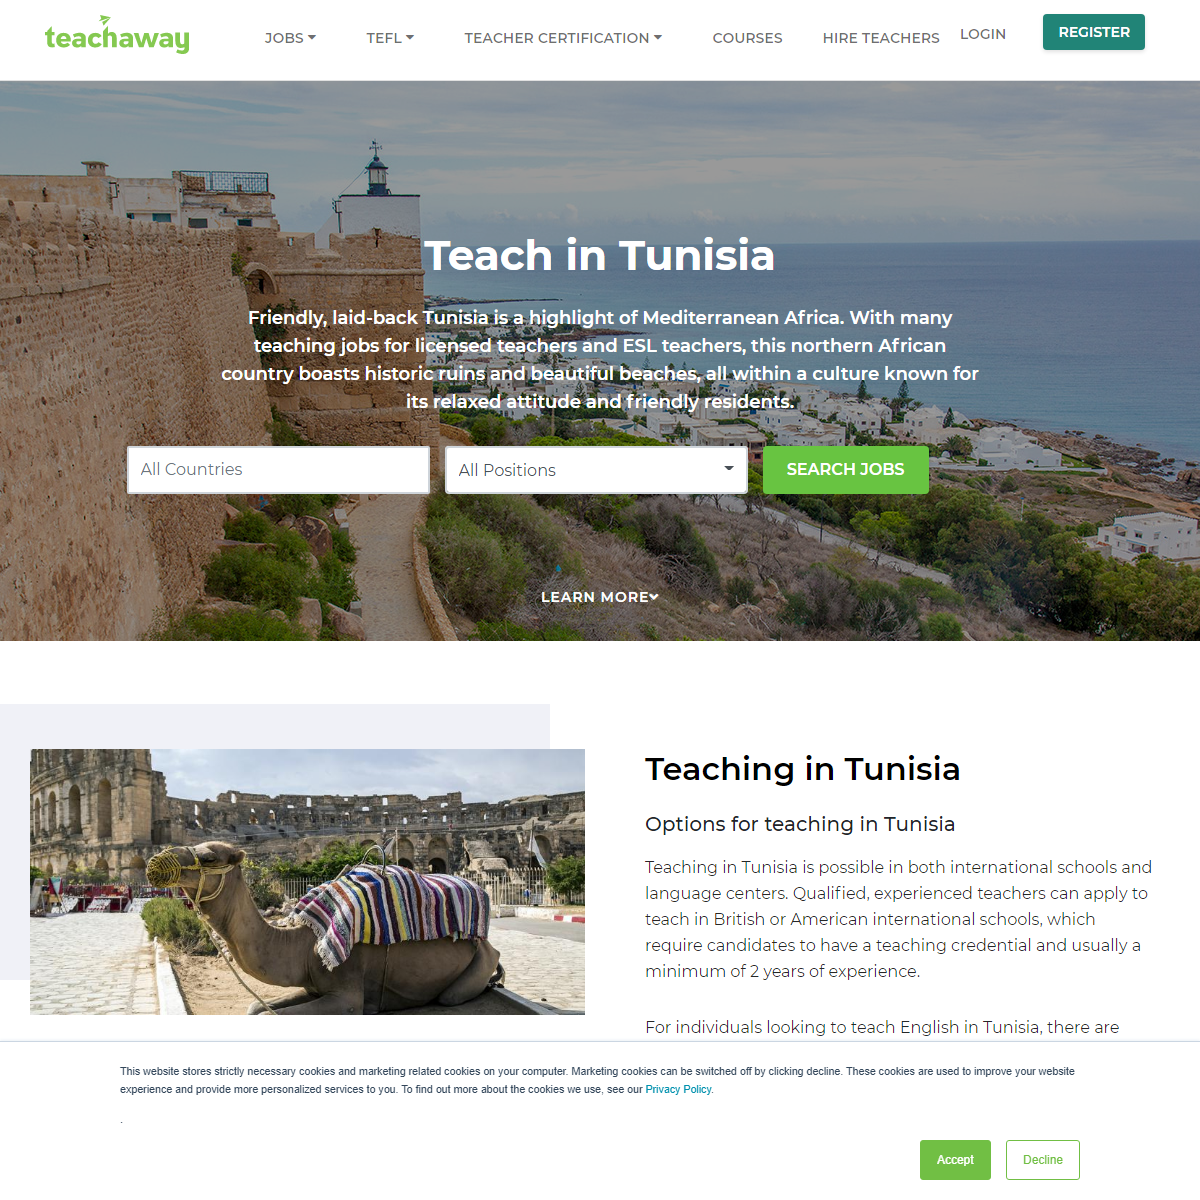 A complete backup of https://www.teachaway.com/teach-tunisia